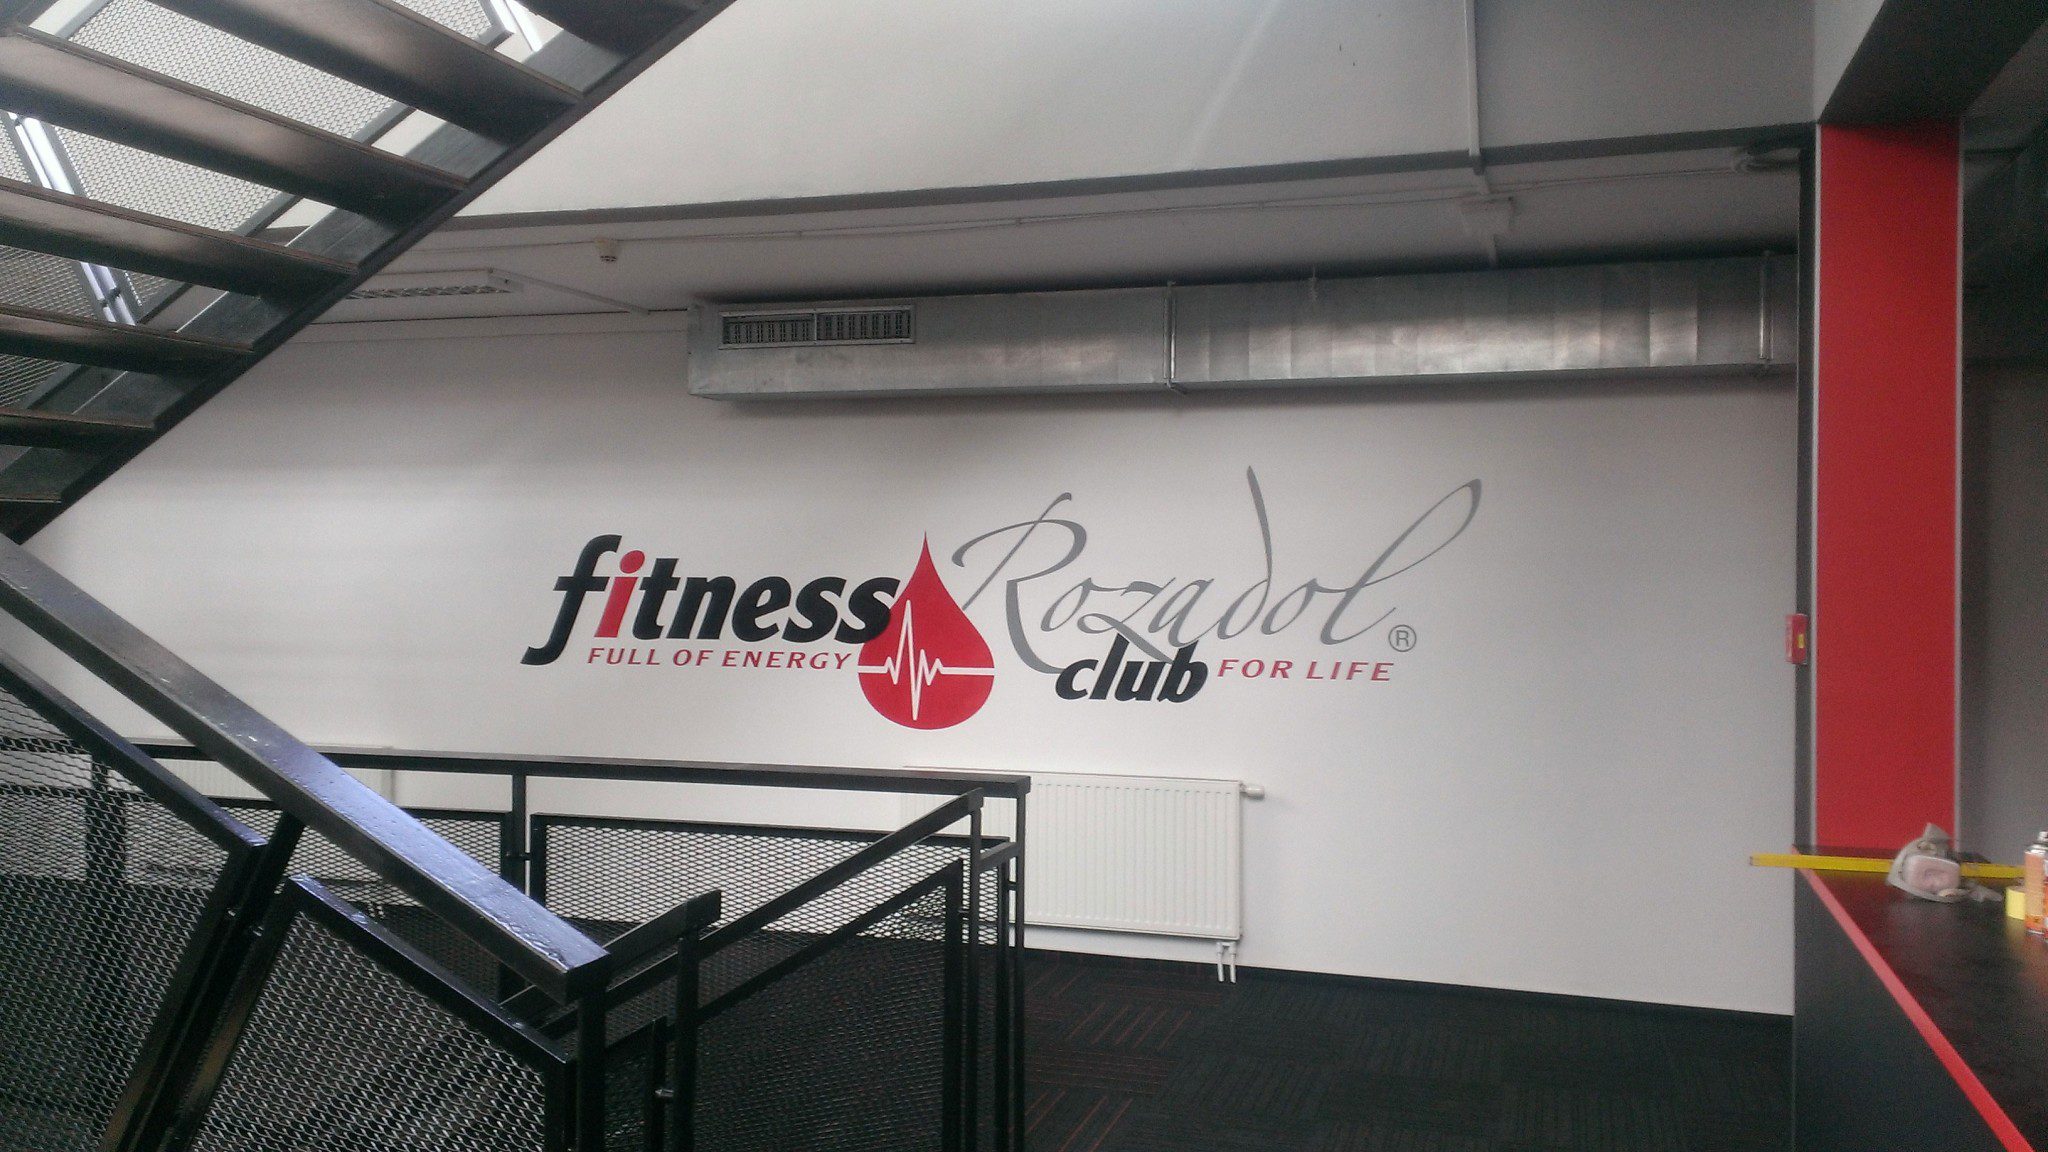 Биллборд - Fitness Rozadol club